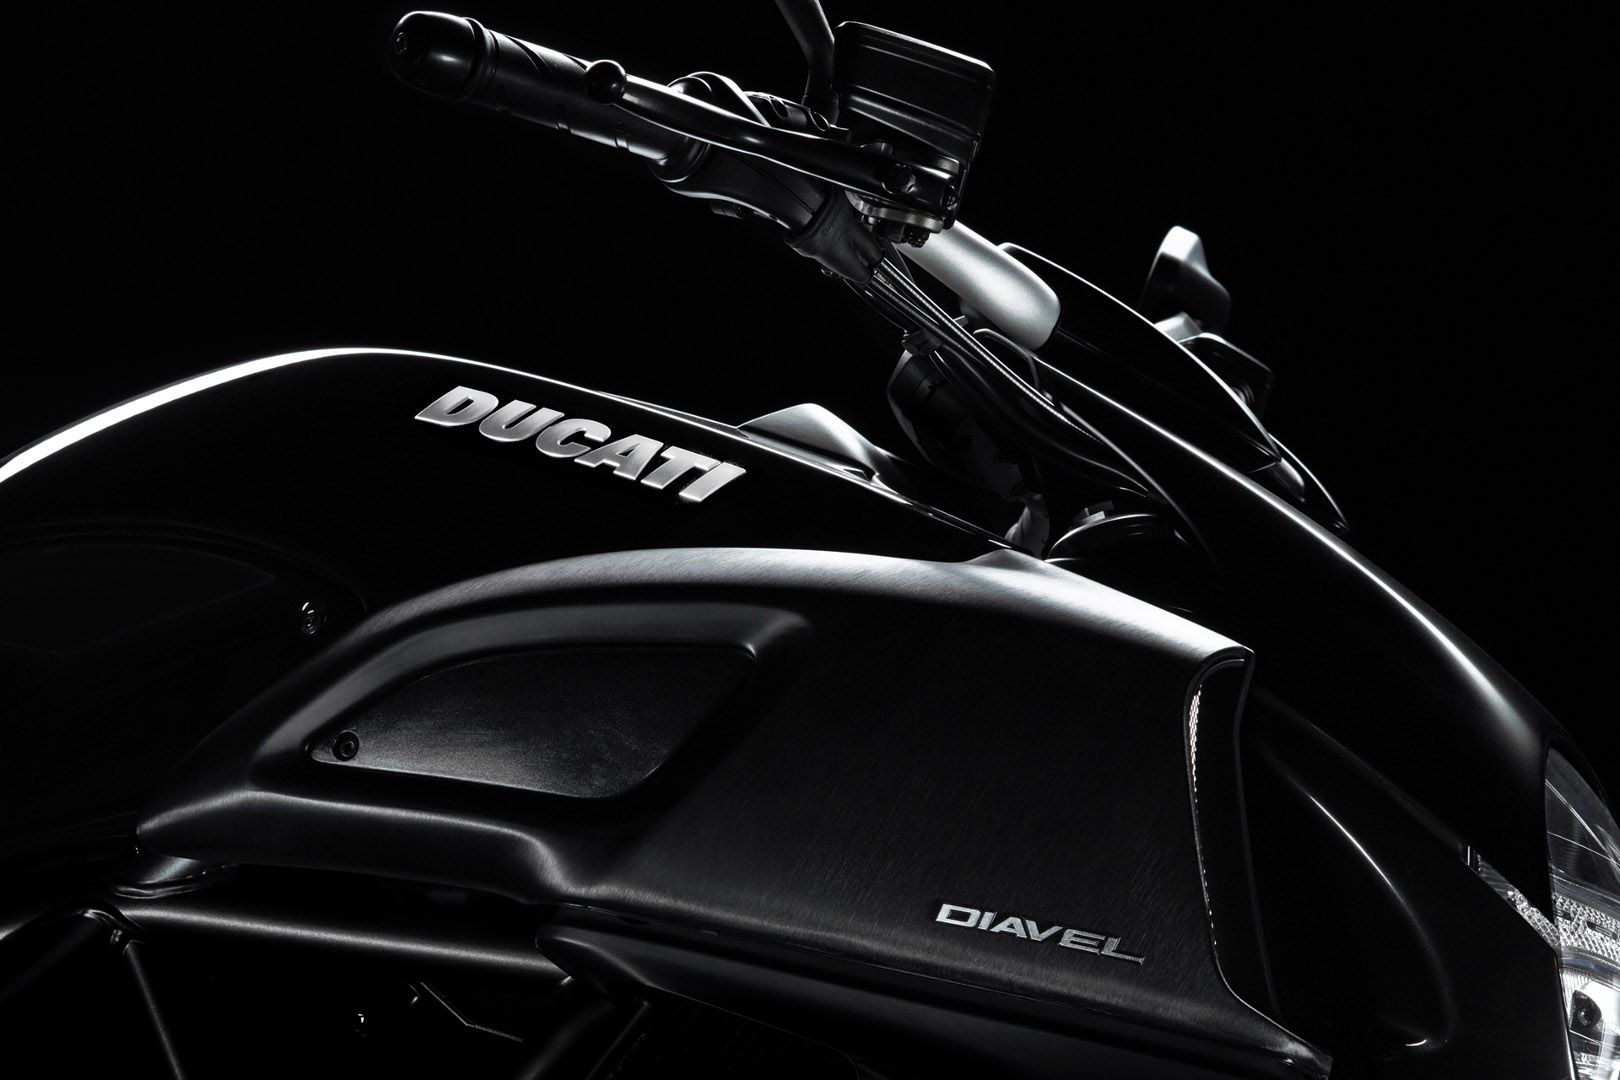 2014 Ducati Diavel